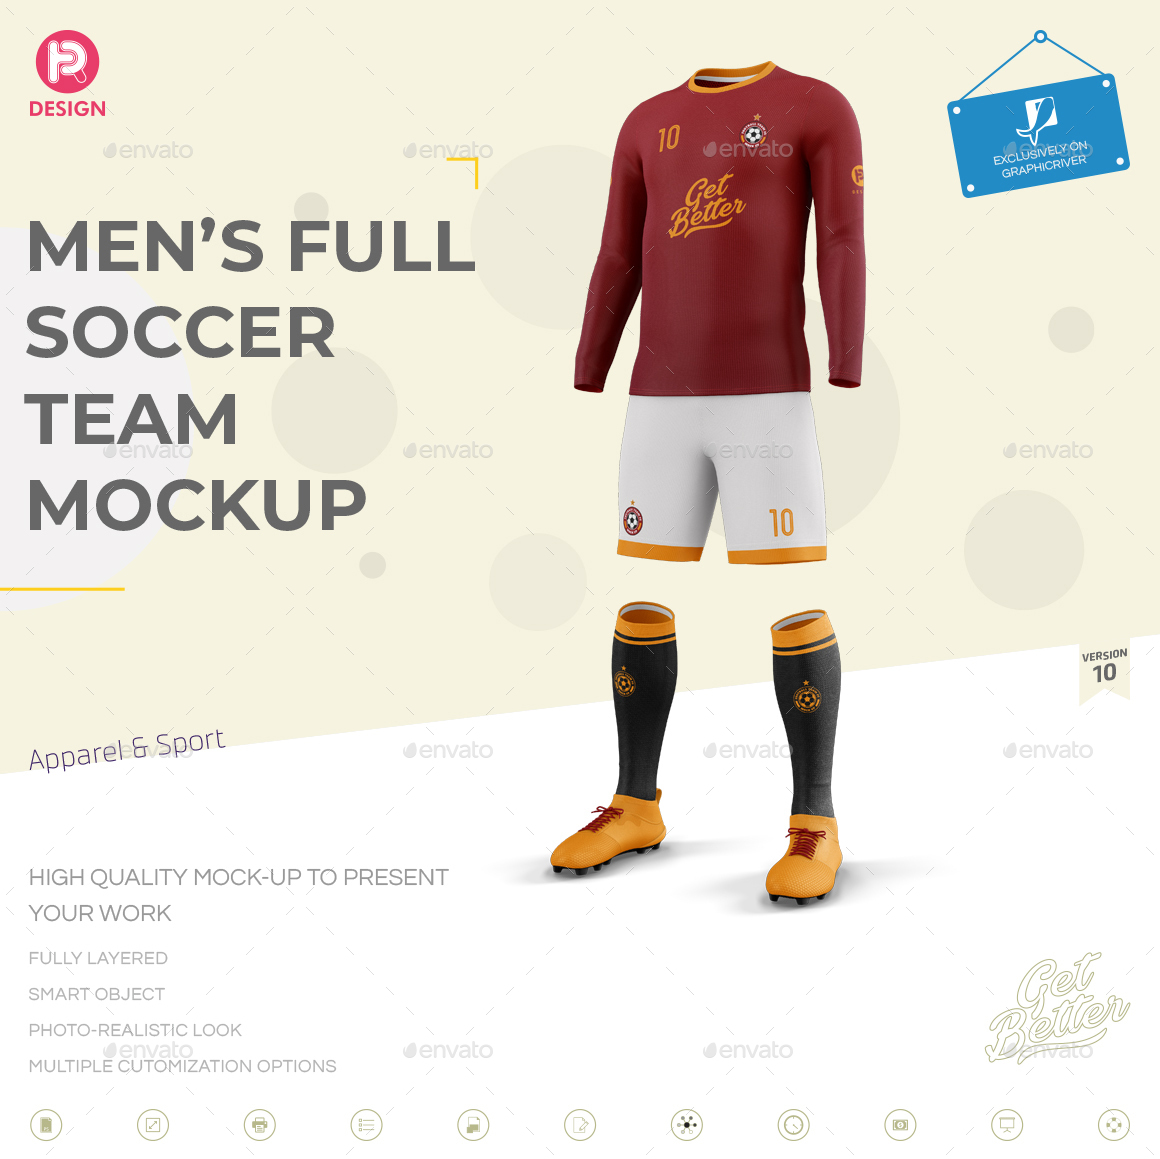 Download Men's Full Soccer Team Kit mockup V10 by TRDesignme | GraphicRiver